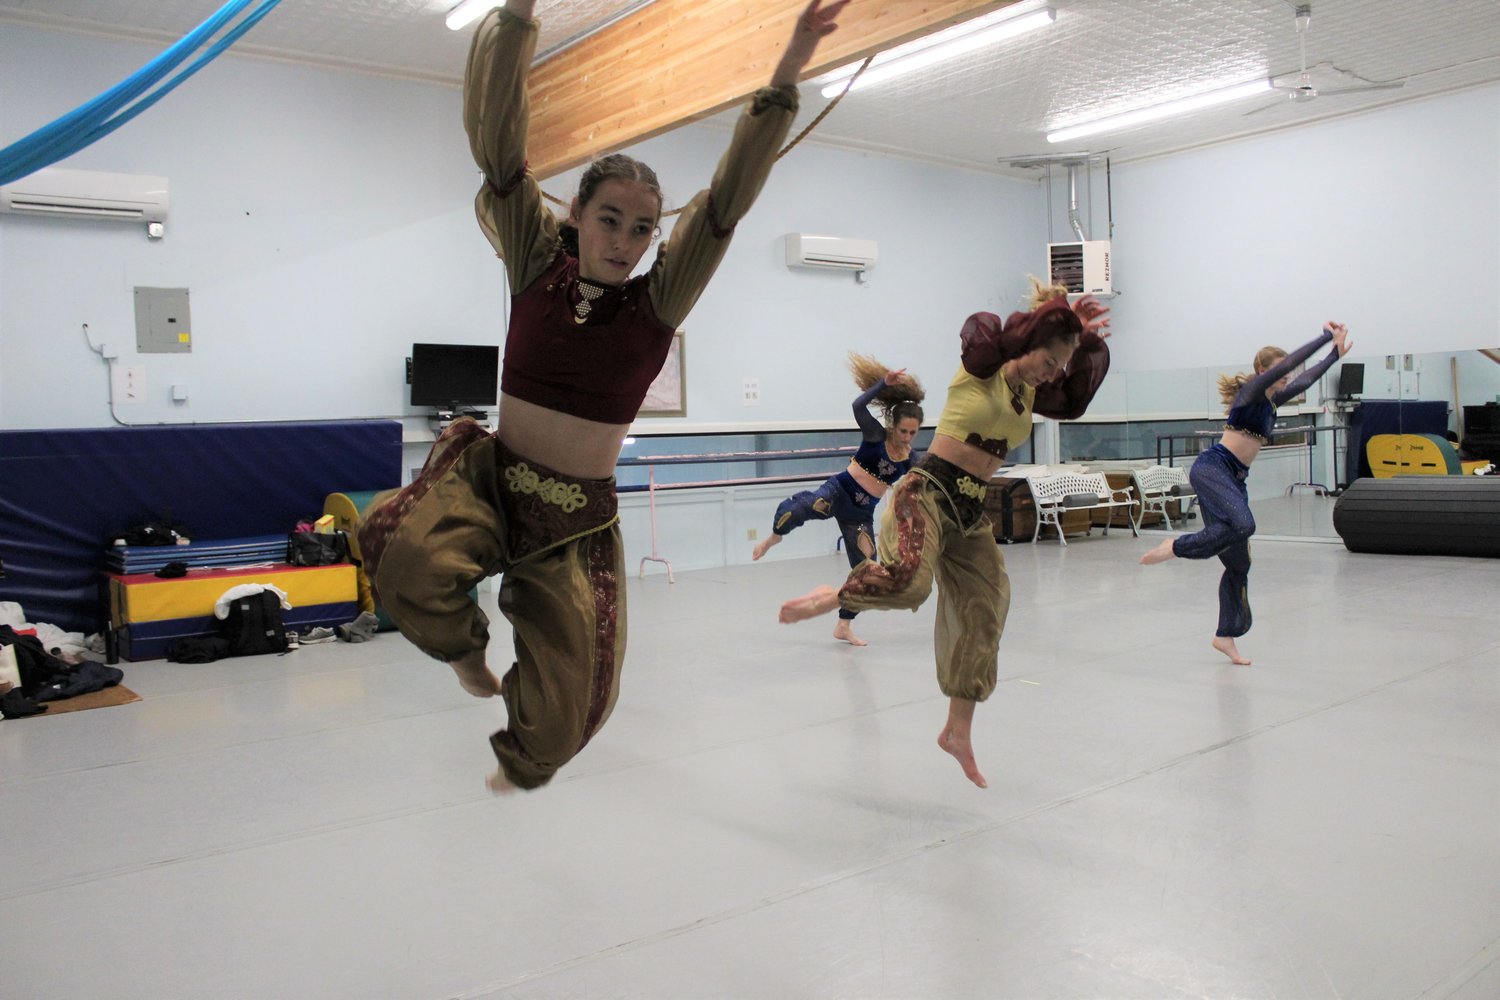 Capri O'Neill, Brianna Jones, Eva Reynolds and Stacy Jones leap during a portion of the Arabian Corps performance for "The Nutcracker Ballet."